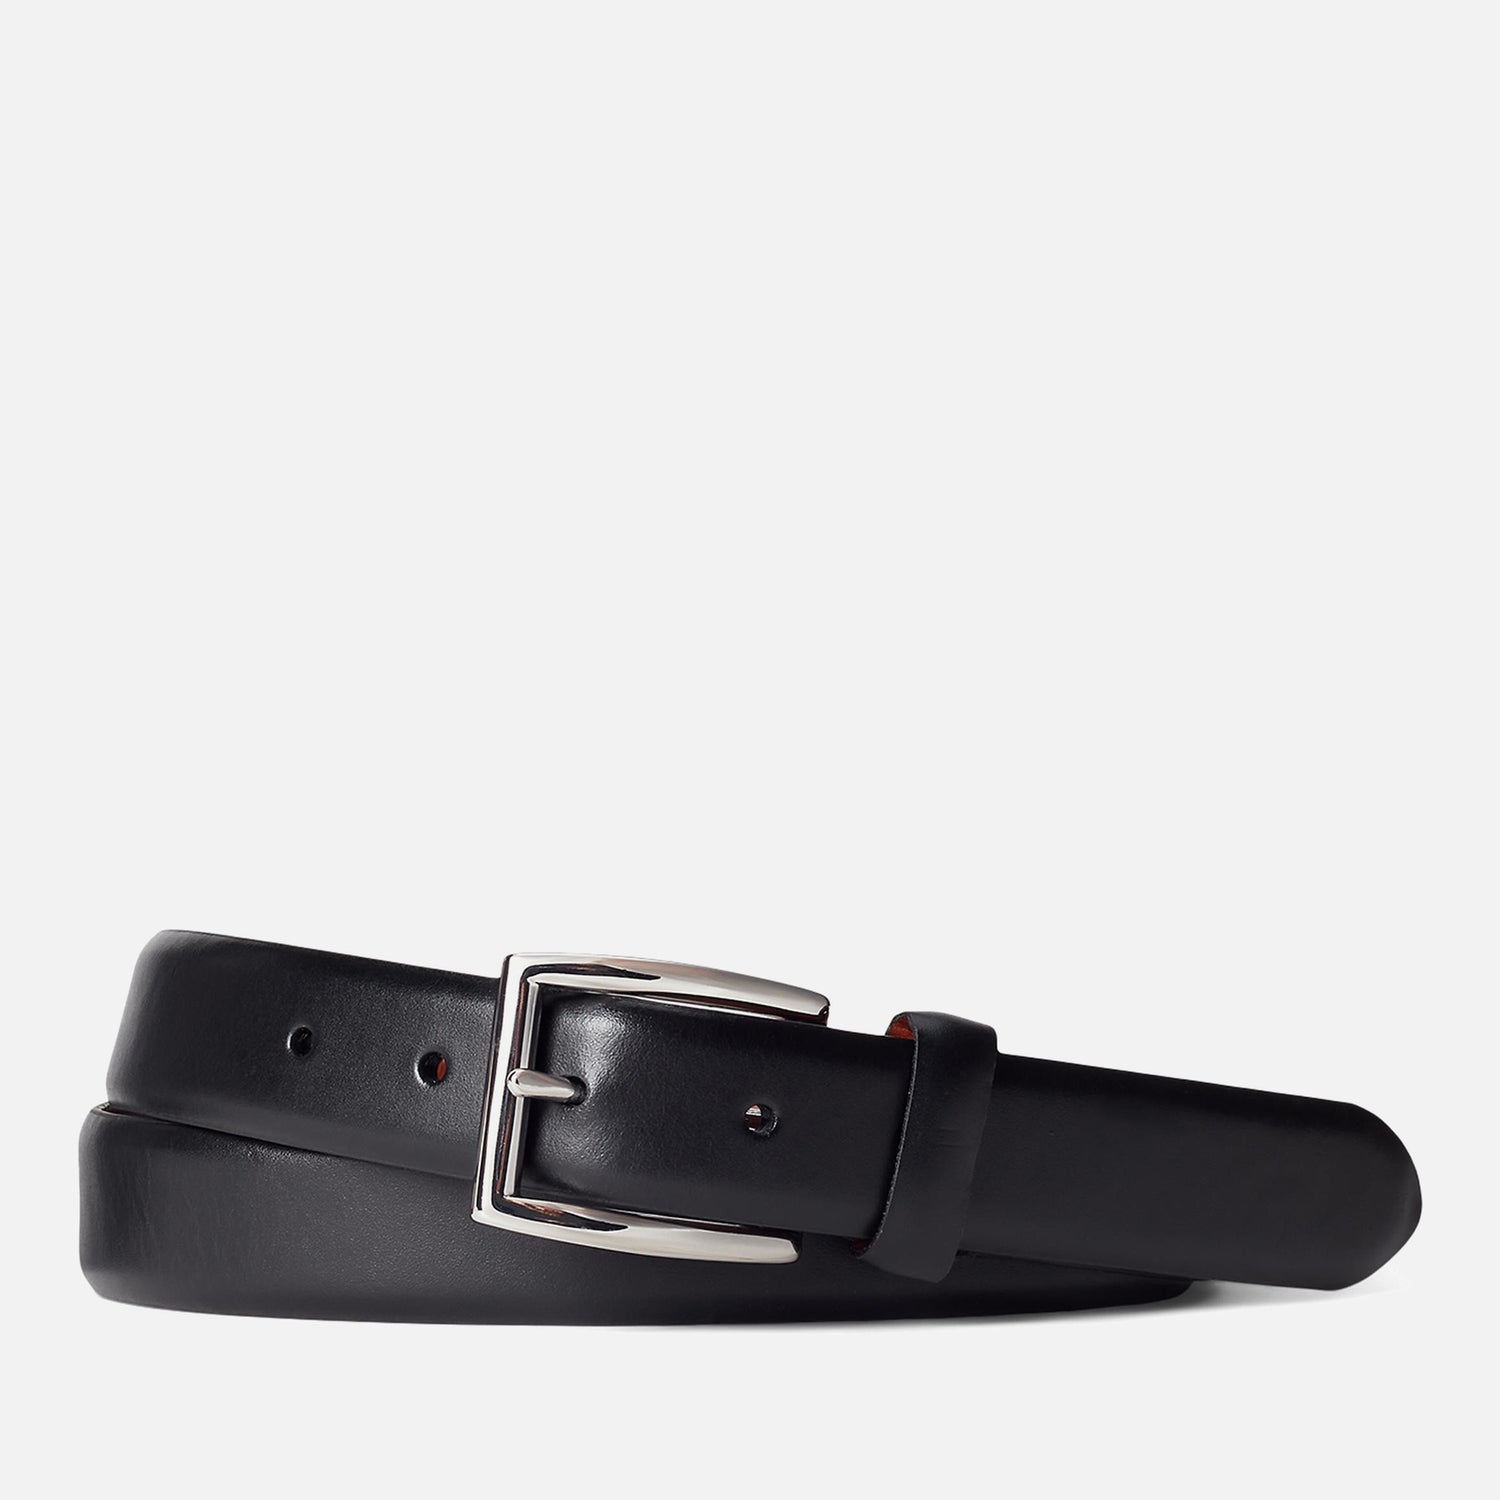 Polo Ralph Lauren Harness Leather Belt - W34